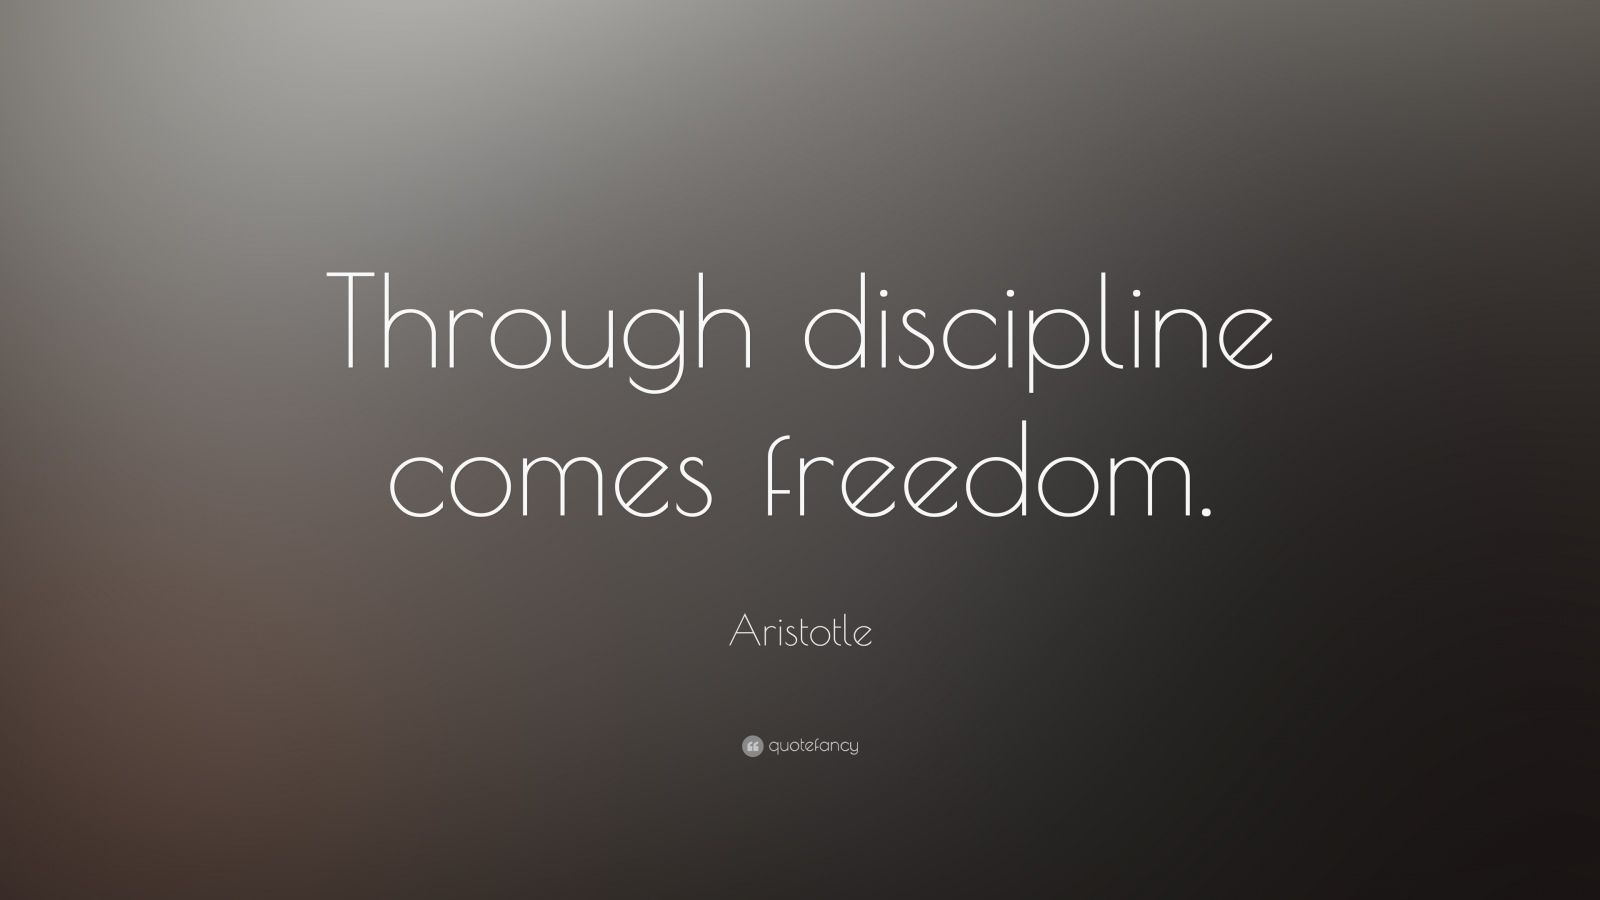 Aristotle Quote: 